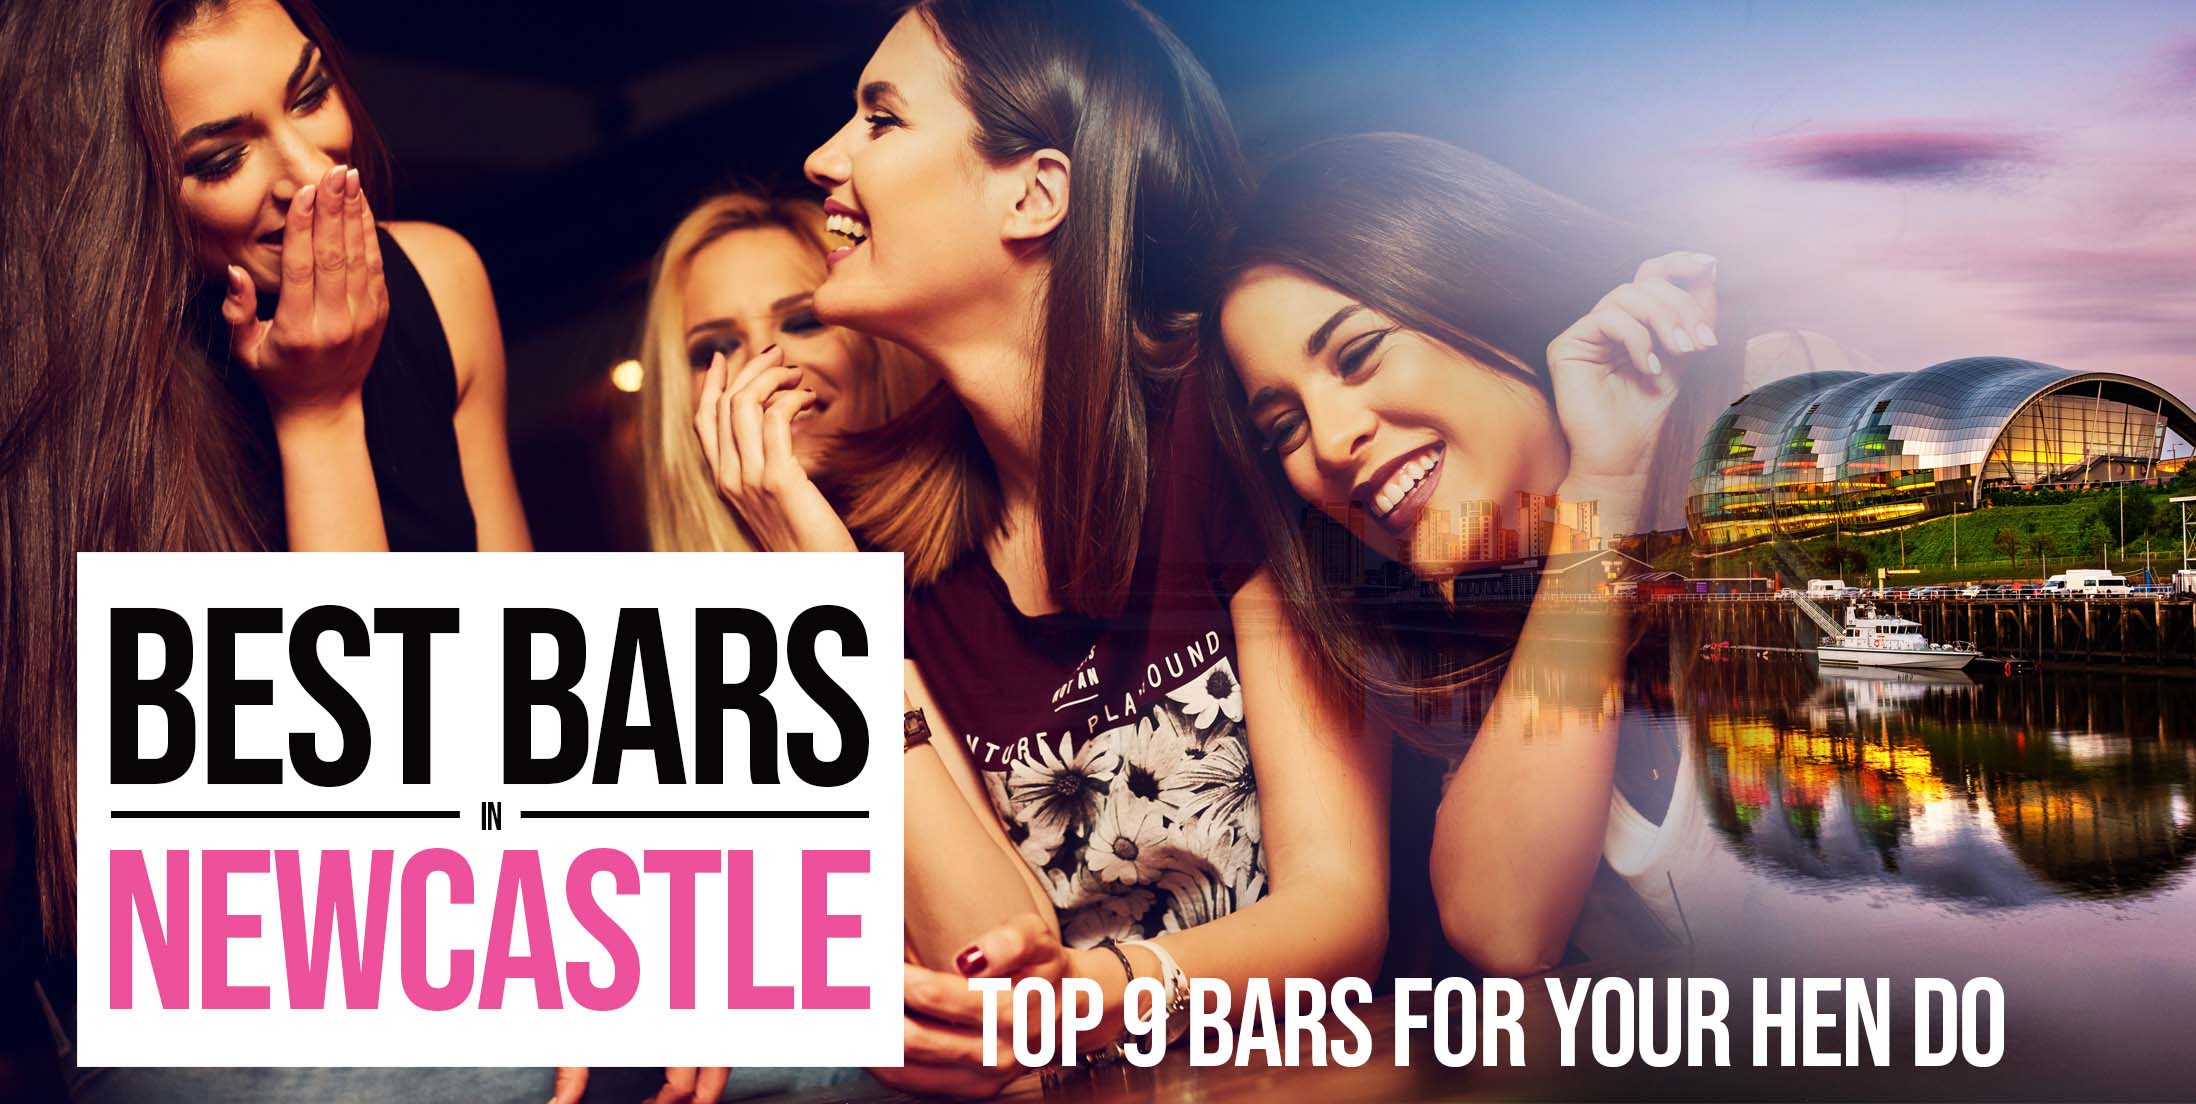 9 Best Bars in Newcastle